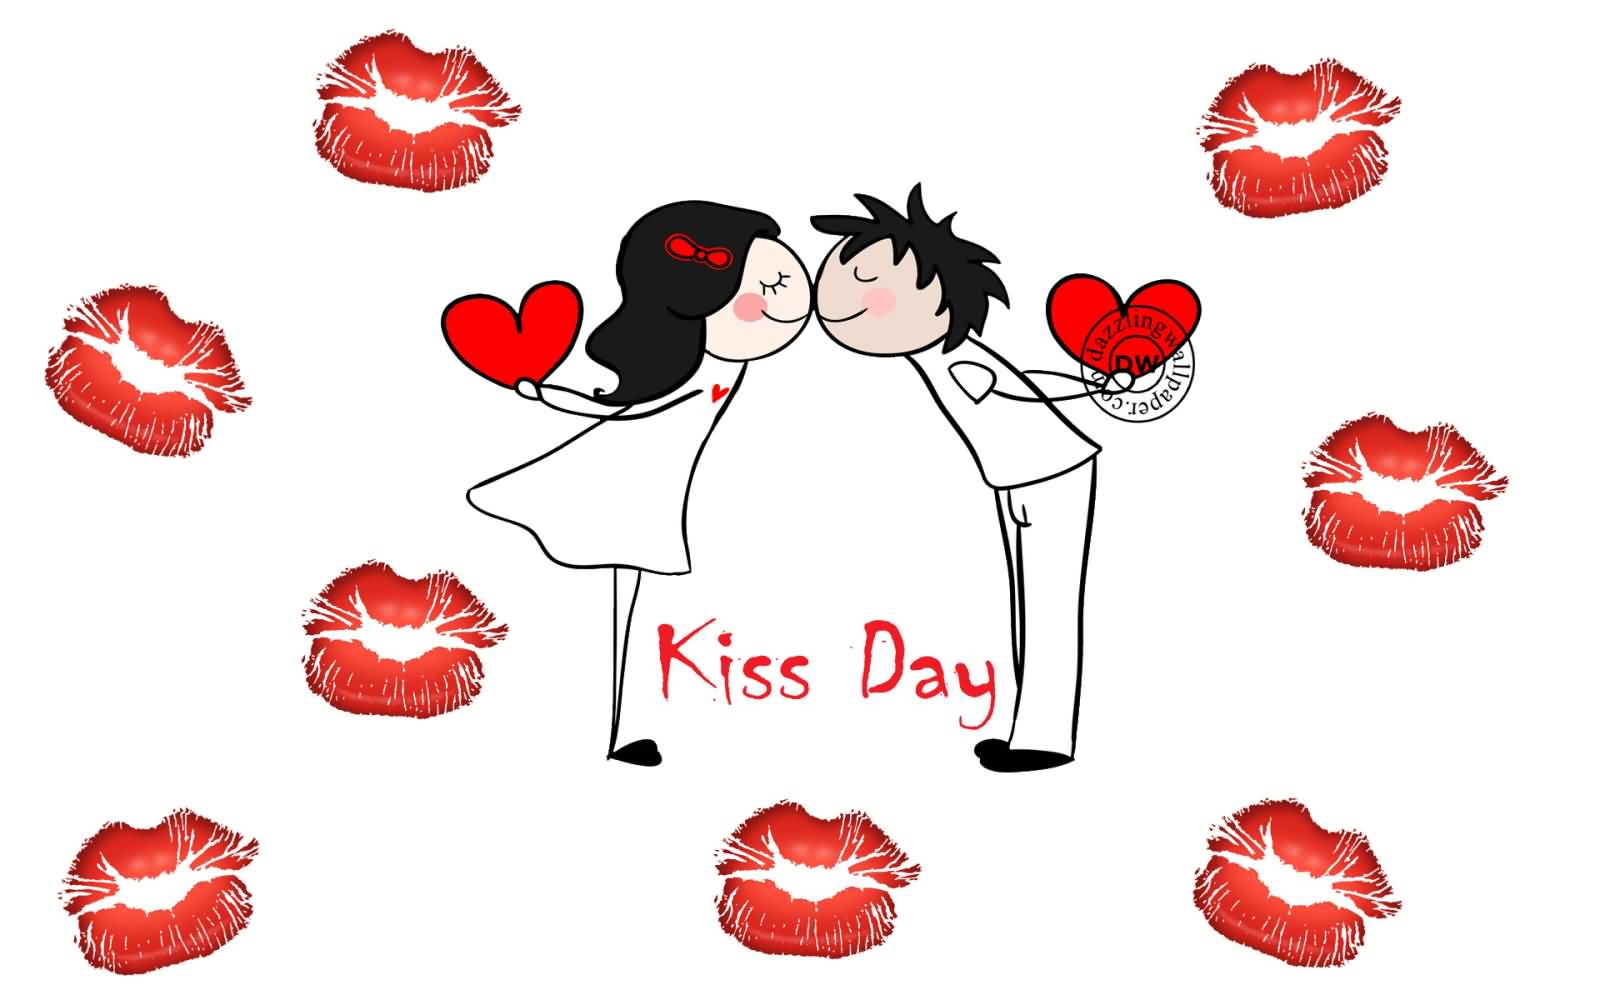 Happy Kiss Day 2017 Kissing Couple Wallpaper